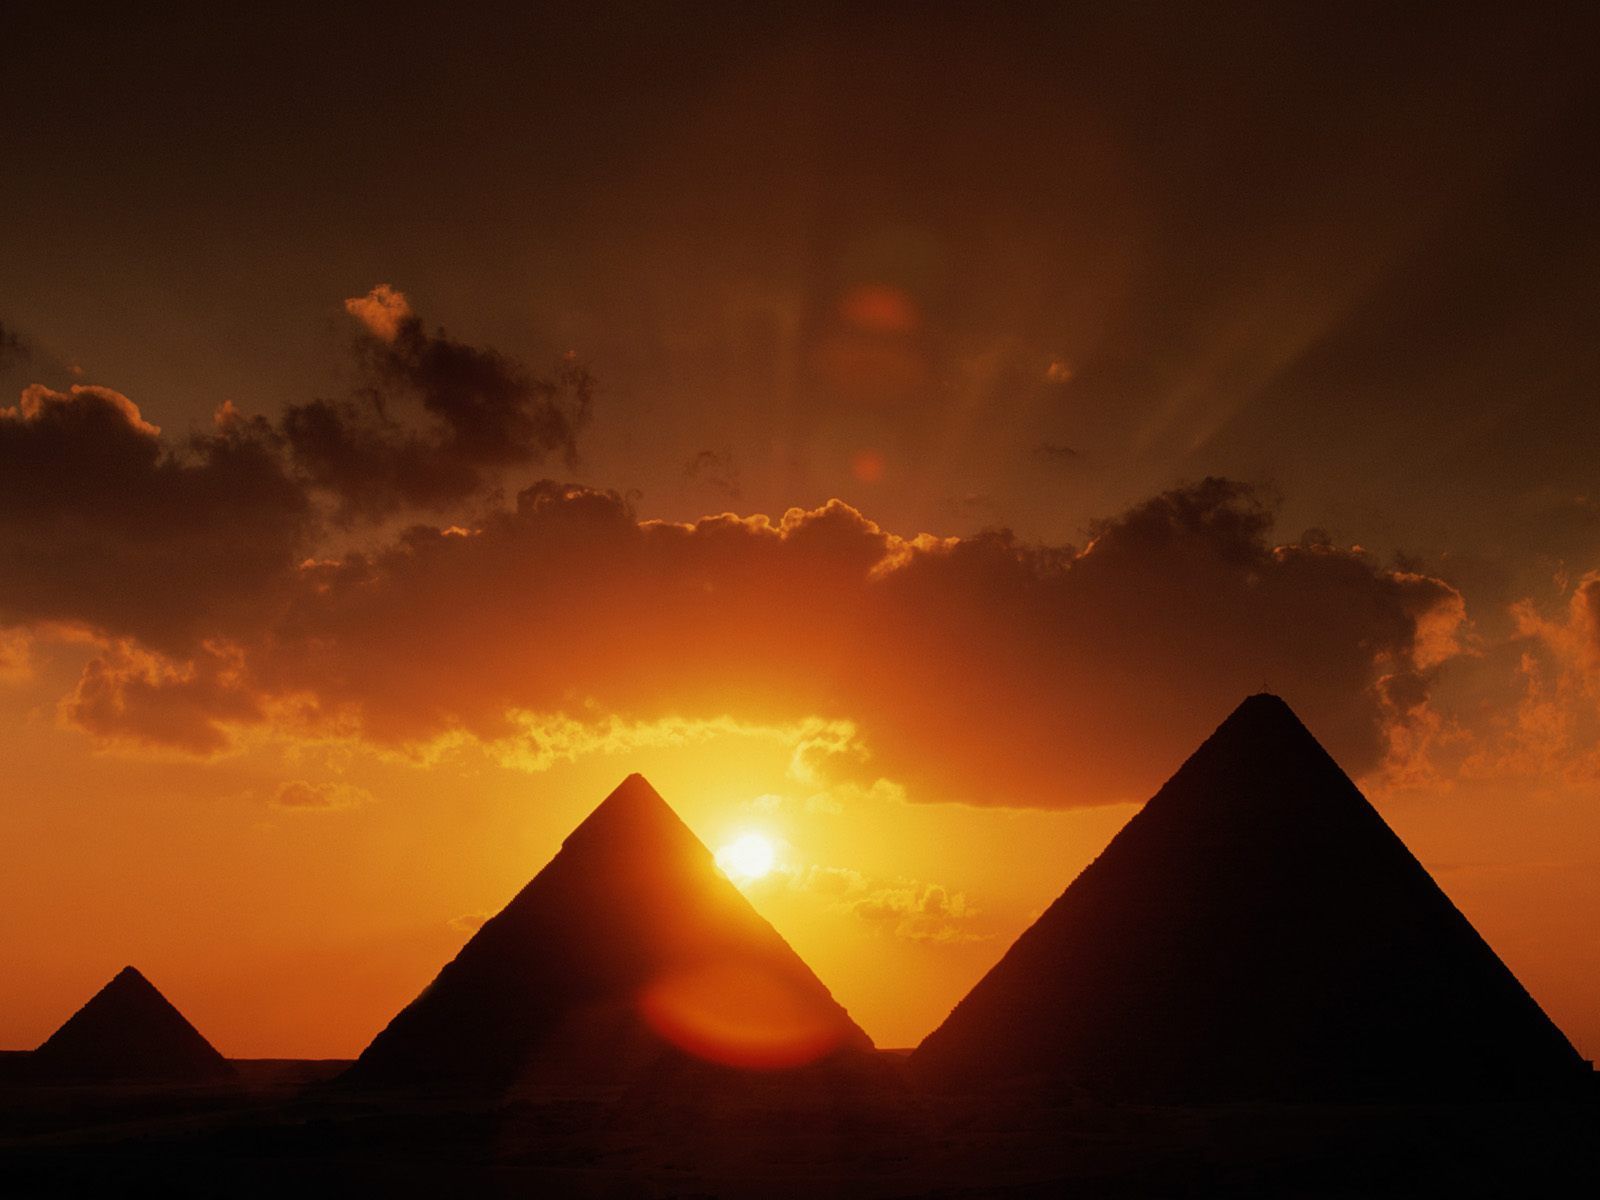 Egypt Pyramids Wallpaper